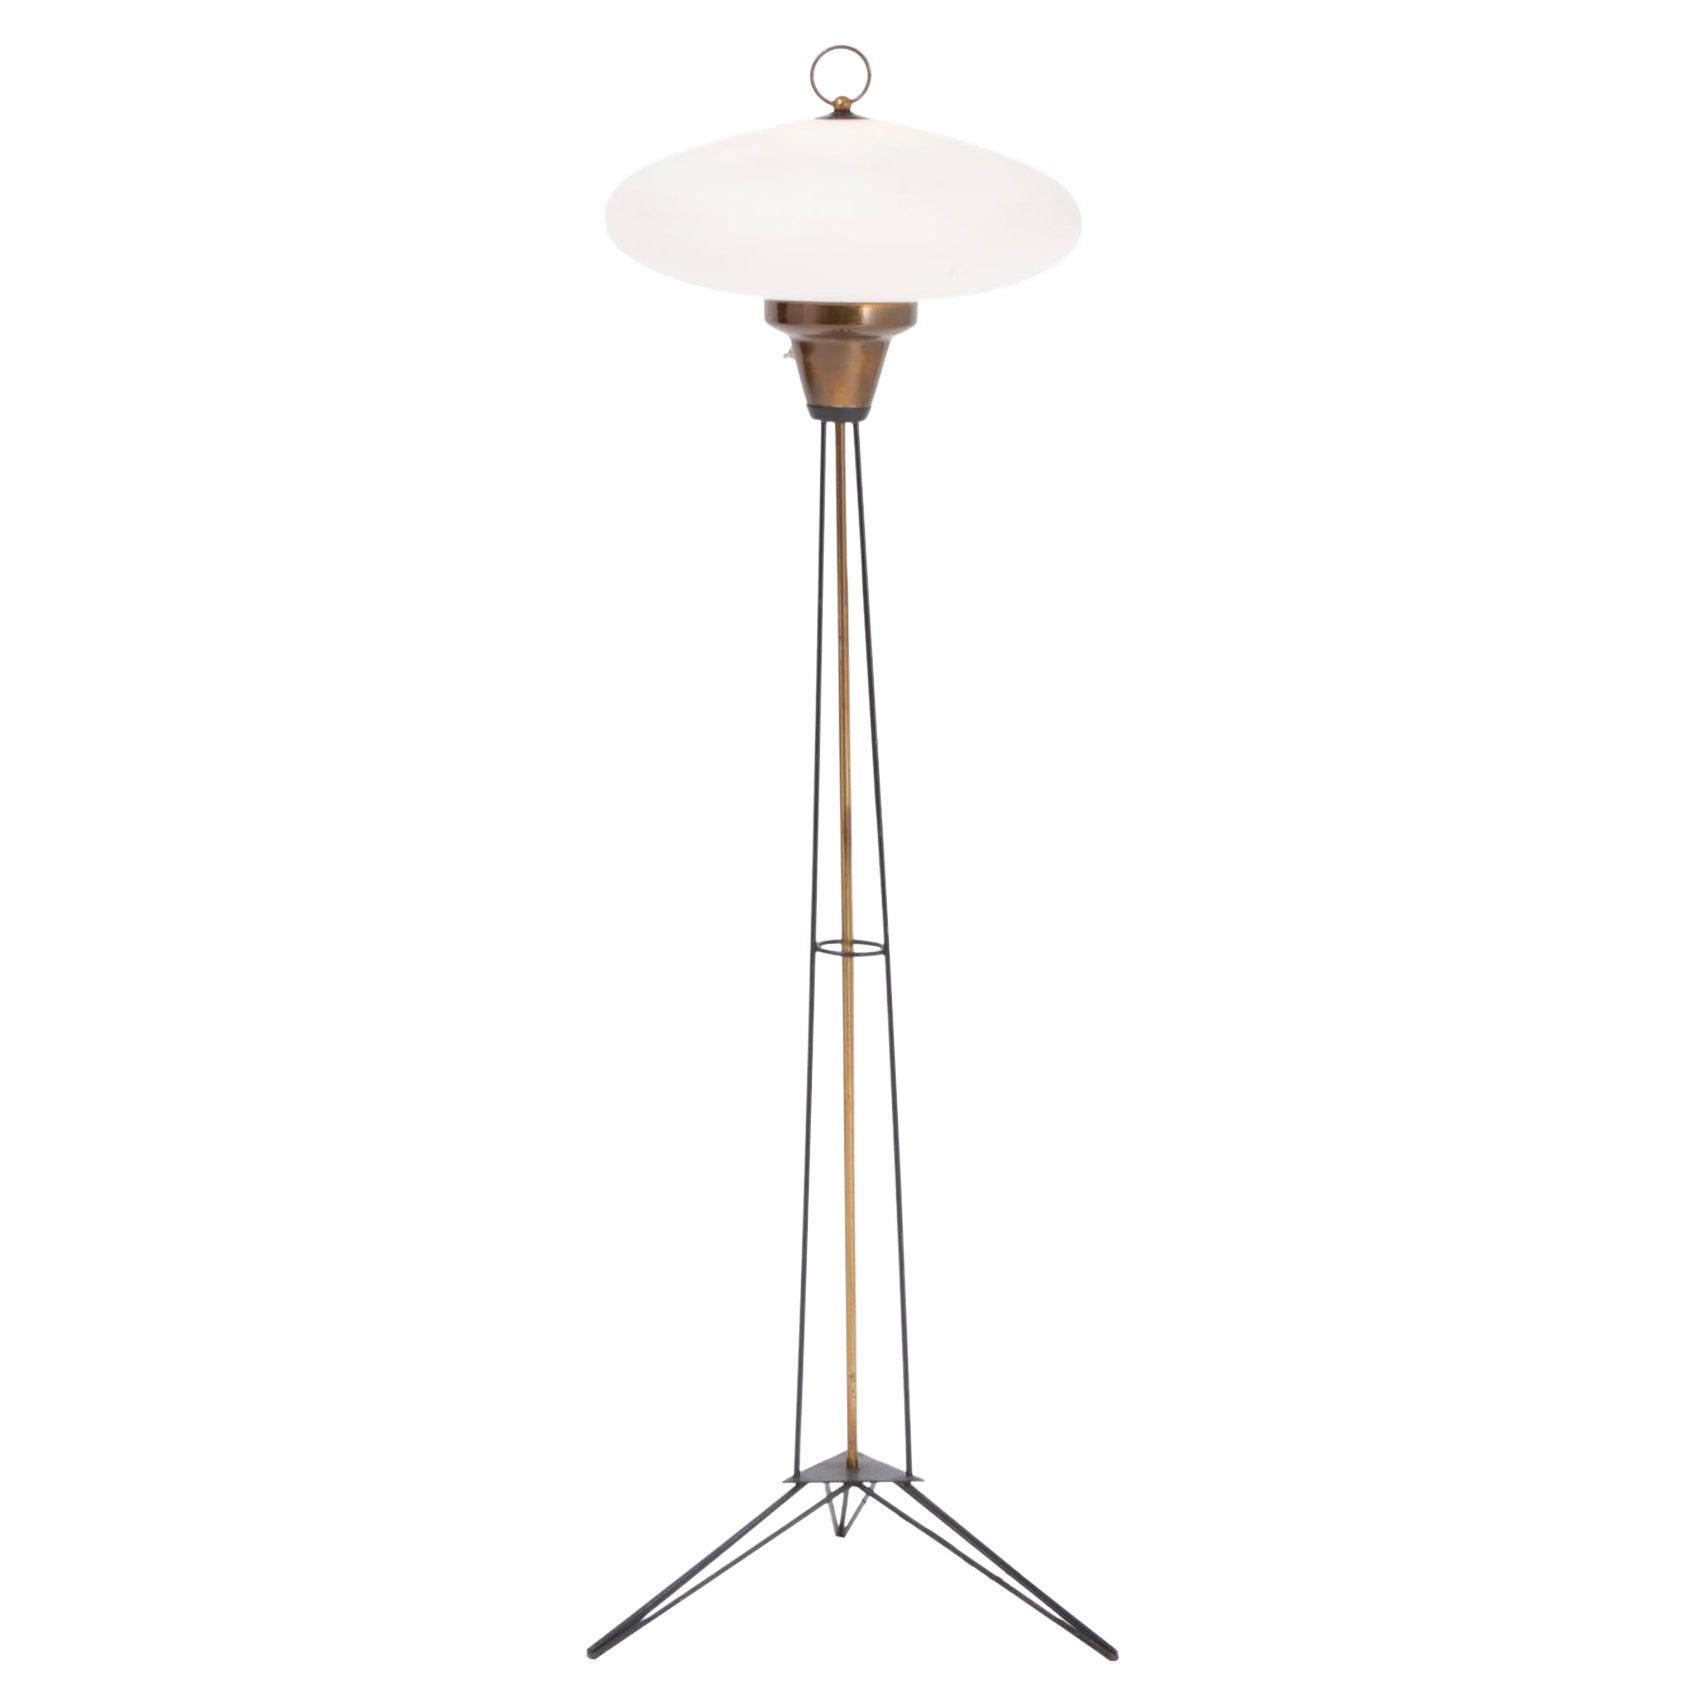 Elegant Italian Midcentury Opaline Glass and Iron Floor Lamp